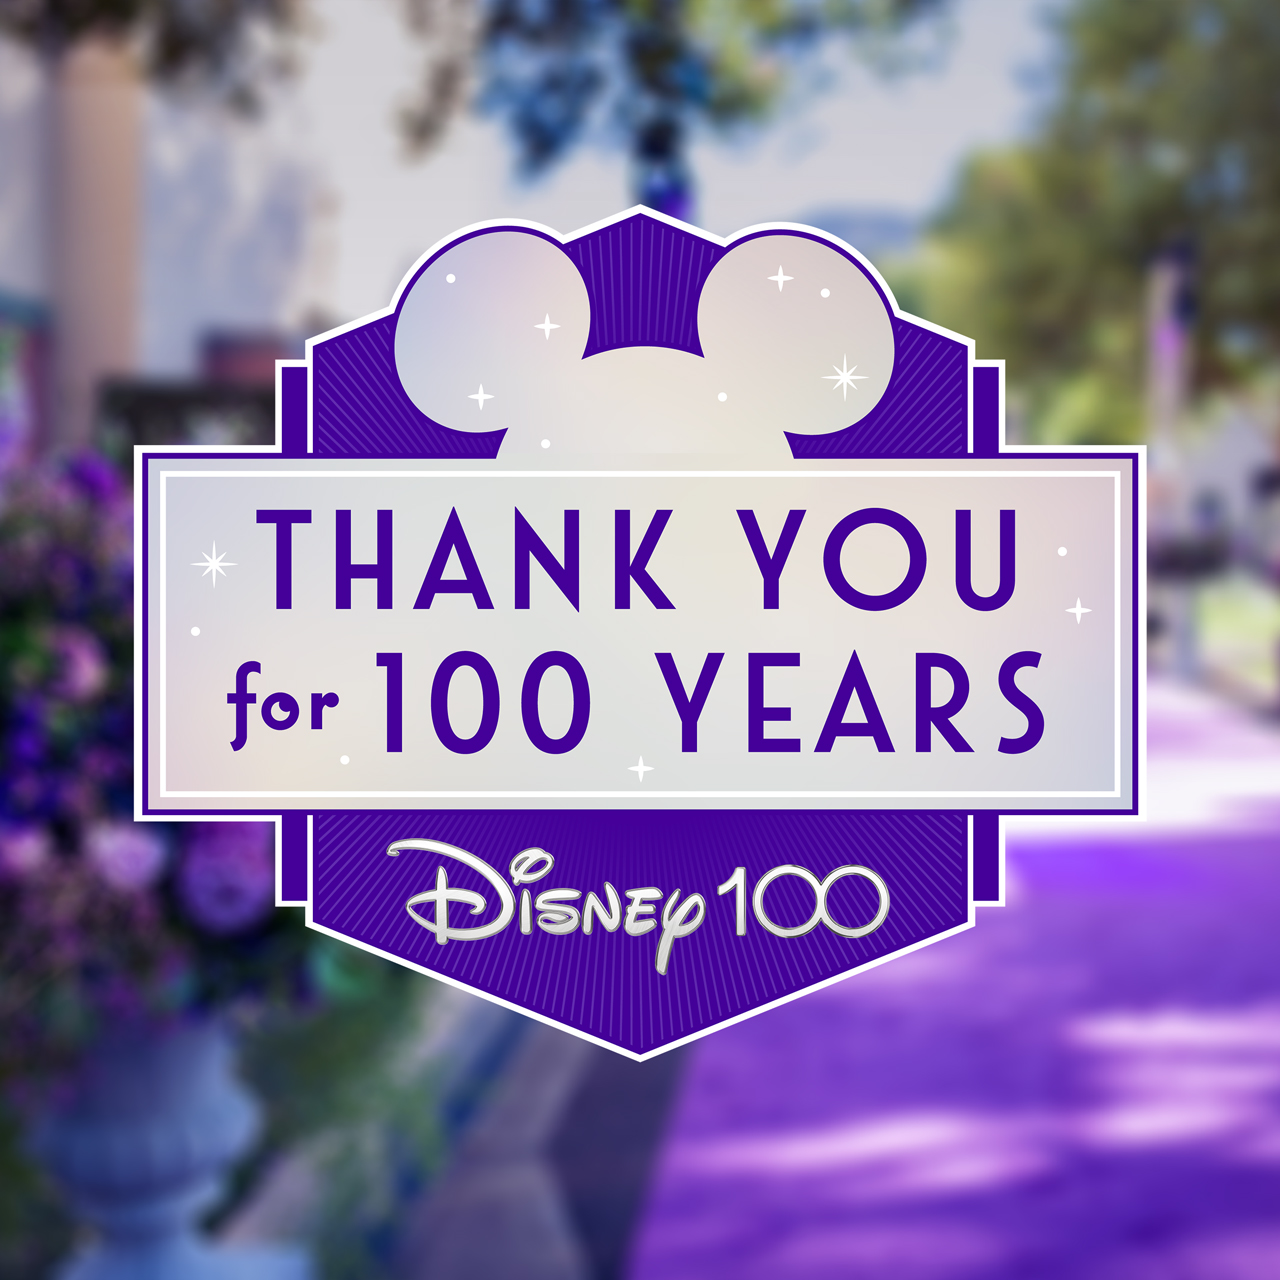 Disney100 Celebrations